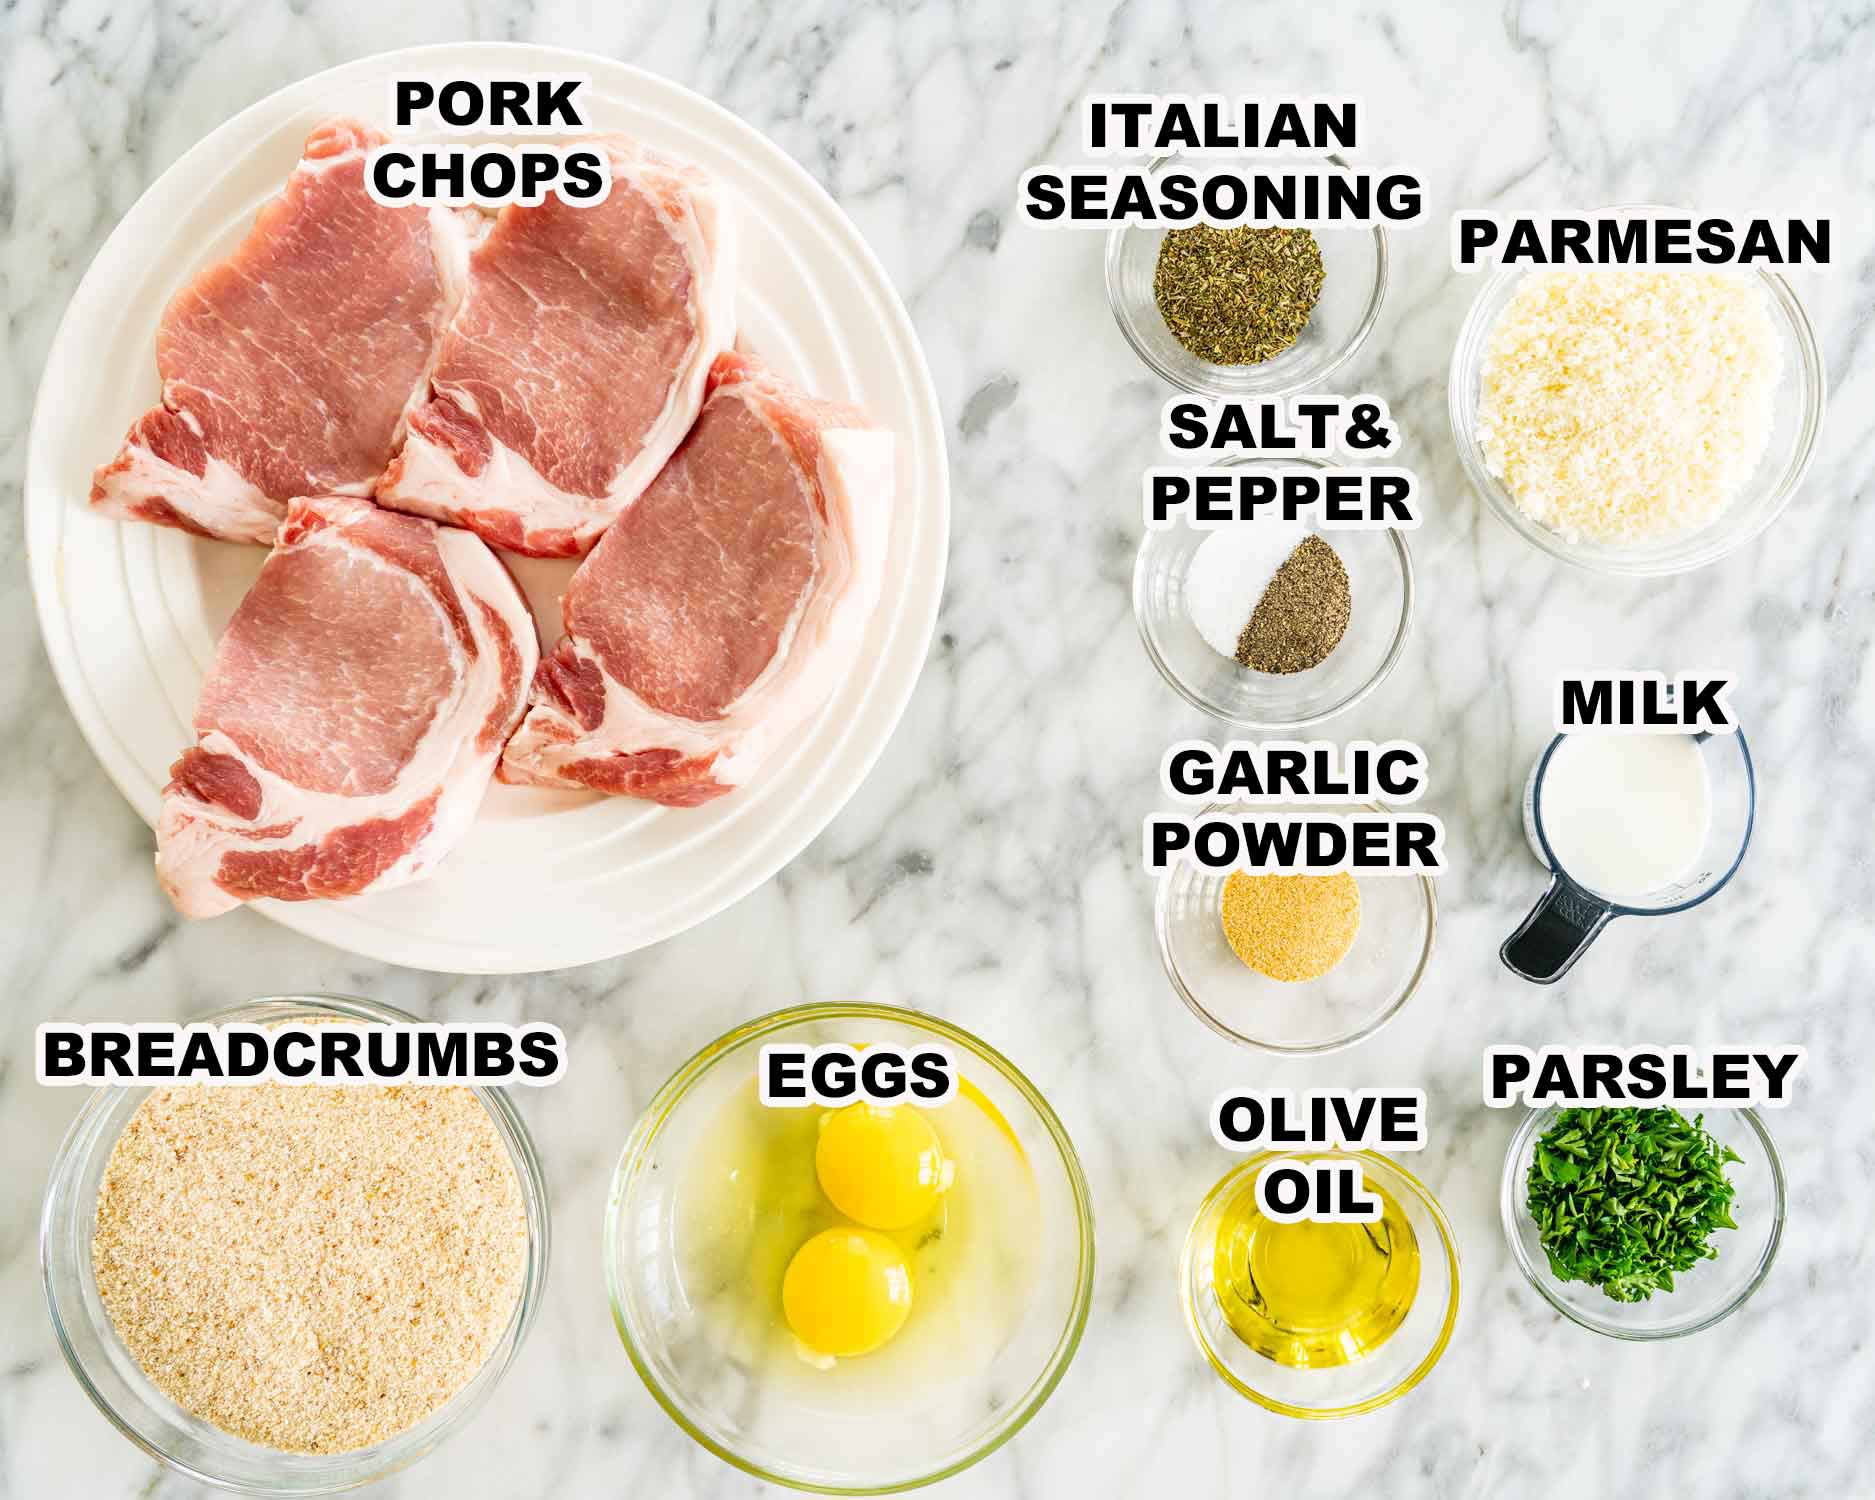 ingredients needed to make italian breaded pork chops.